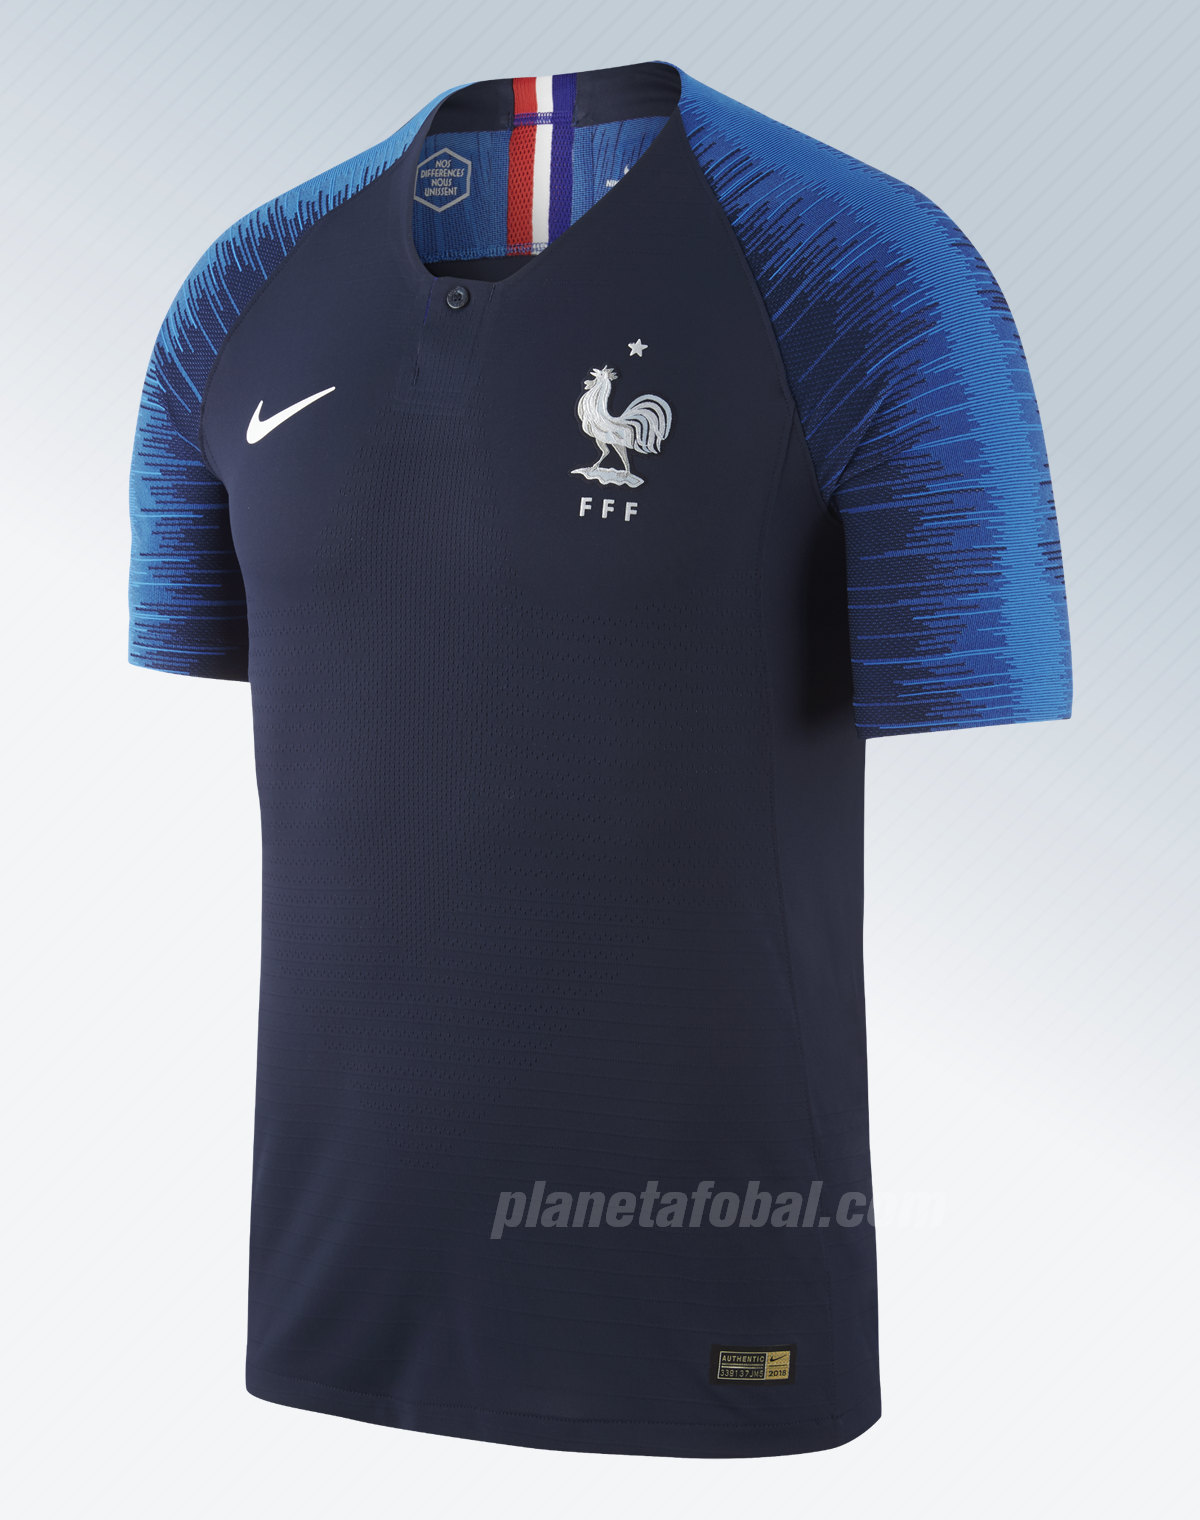 Calma Zoológico de noche Disfraz Camisetas Nike de Francia Mundial 2018